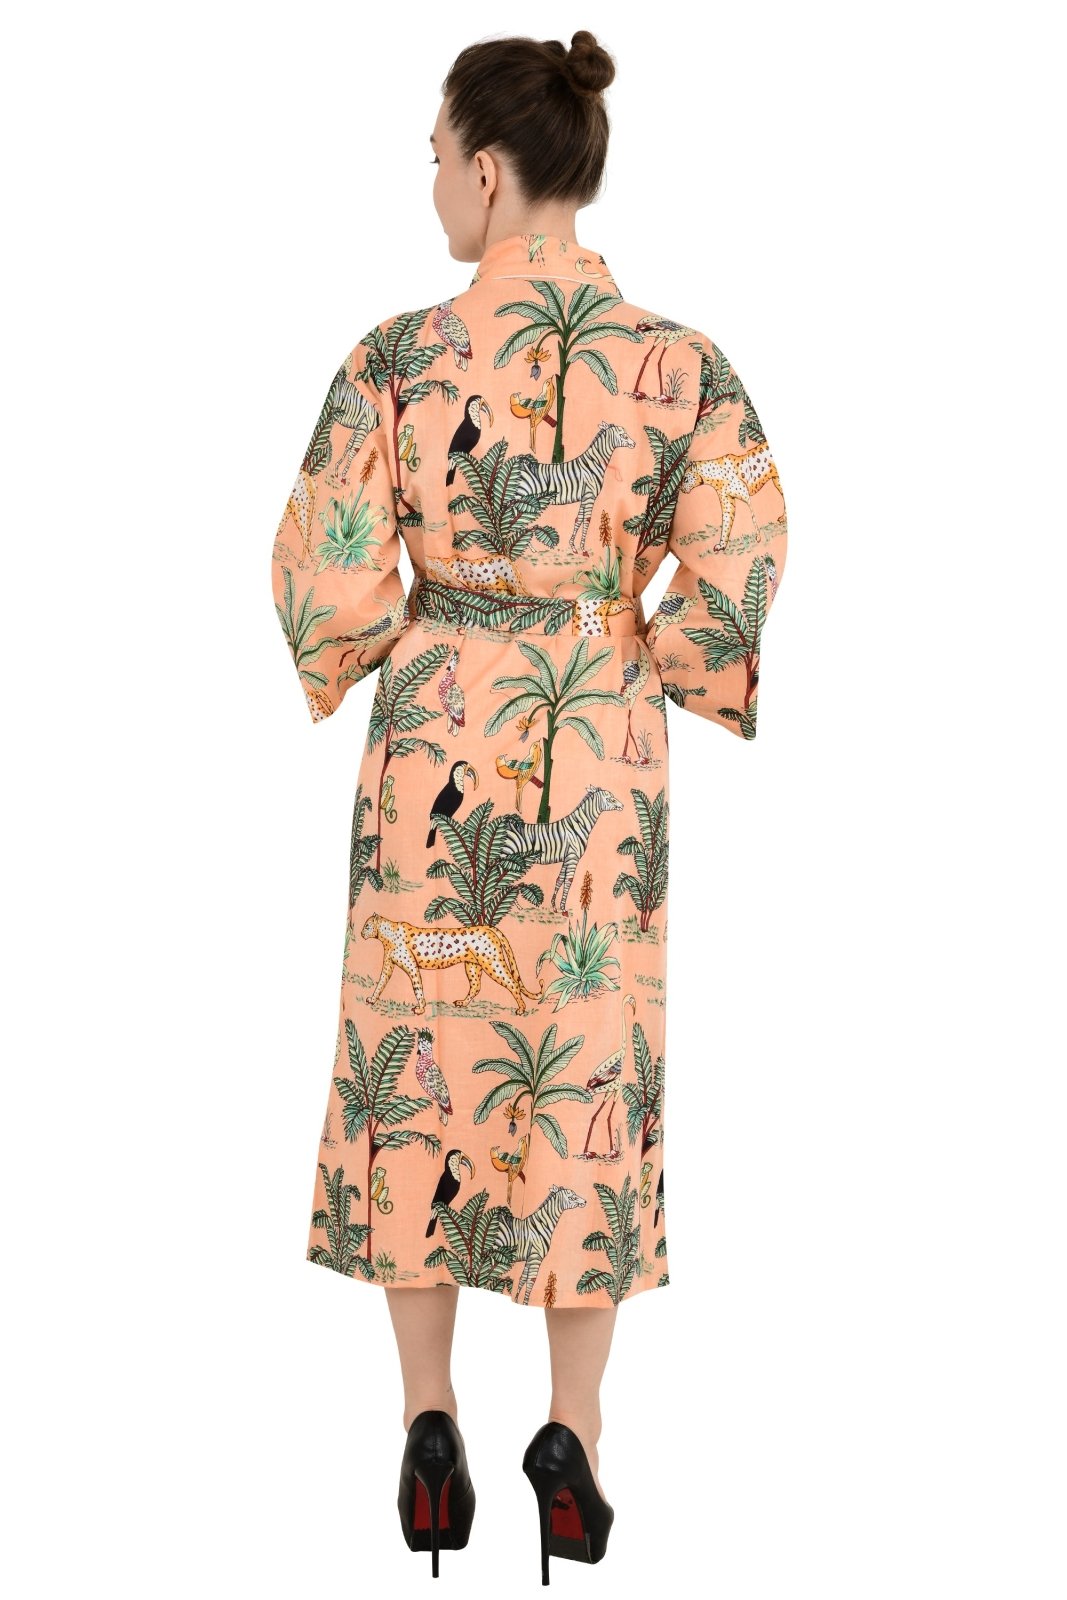 Pure Cotton Kimono Indian Handprinted Boho House Robe Summer Dress | Peach Jungle Cheetah Animal Elegant Luxury Beach Holiday Yacht Cover Up - The Eastern Loom